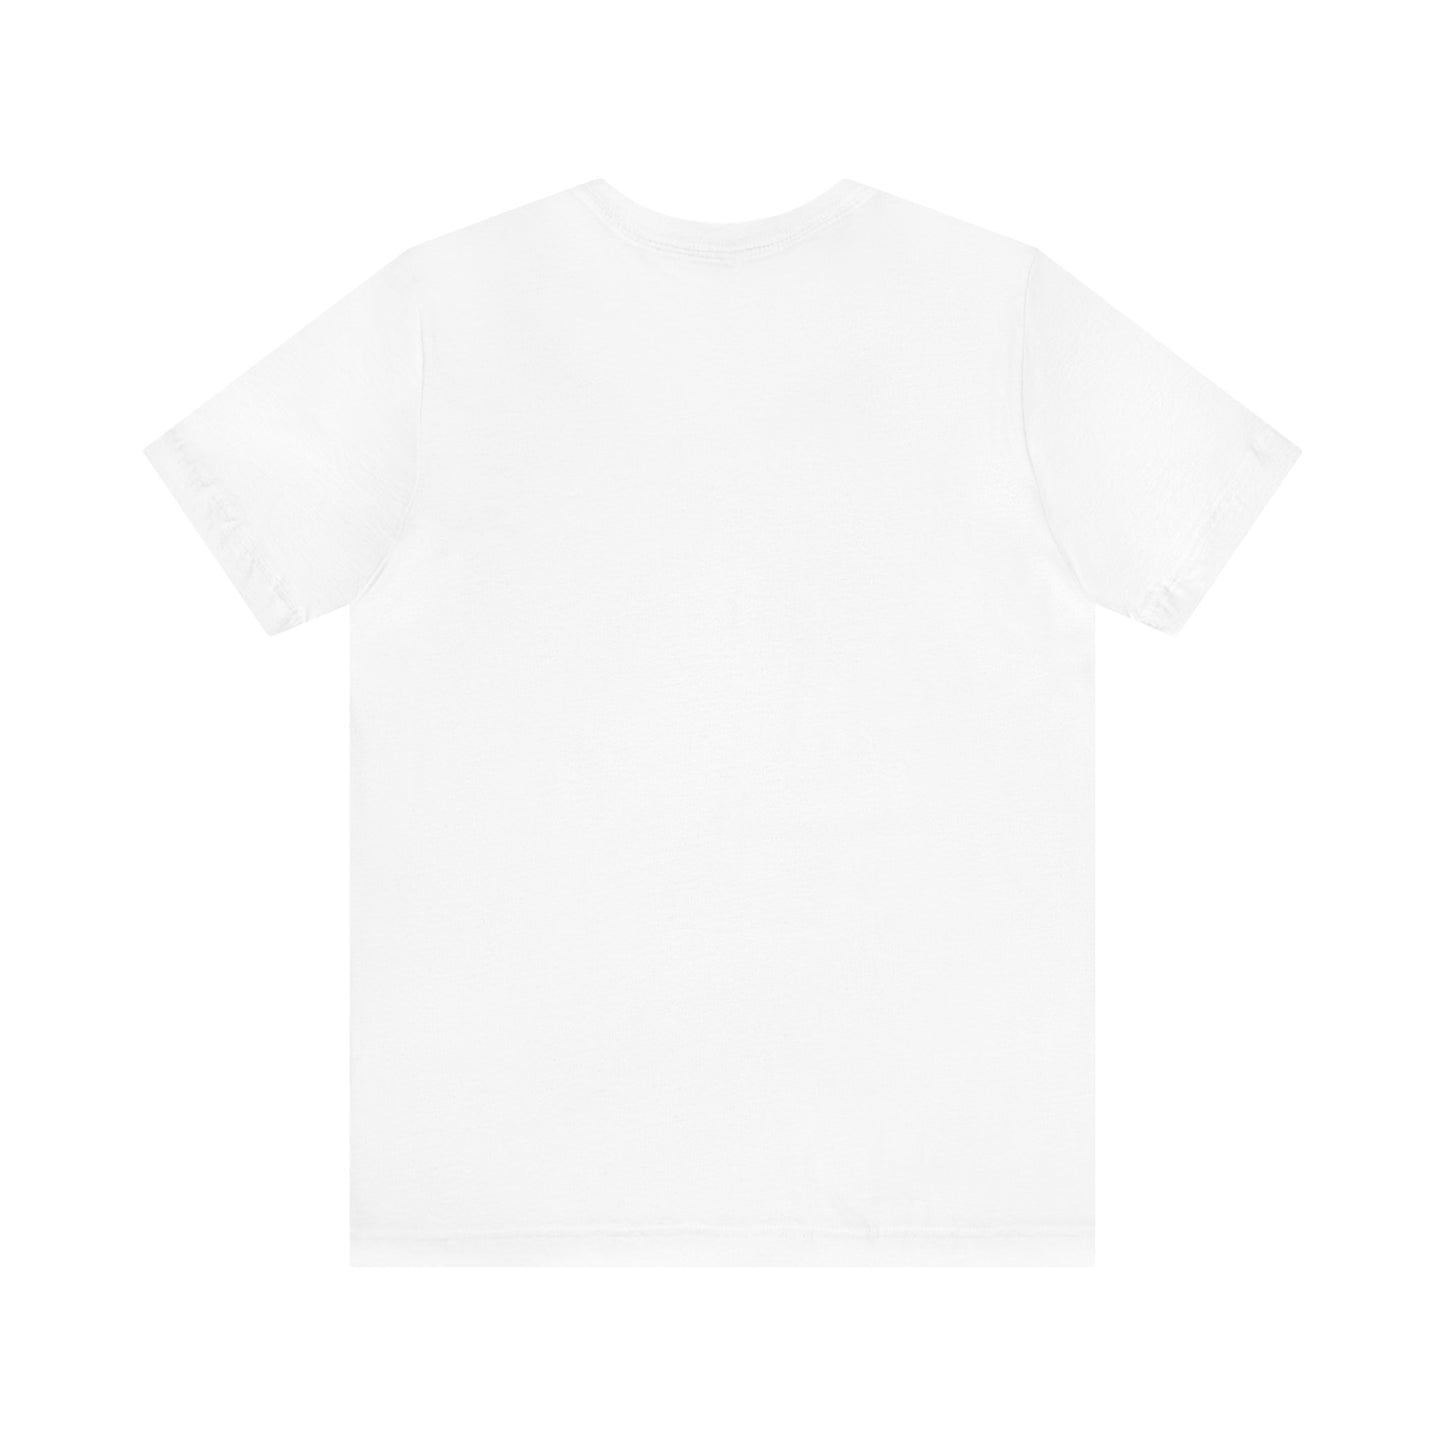 Sparklefox ASD T-Shirt